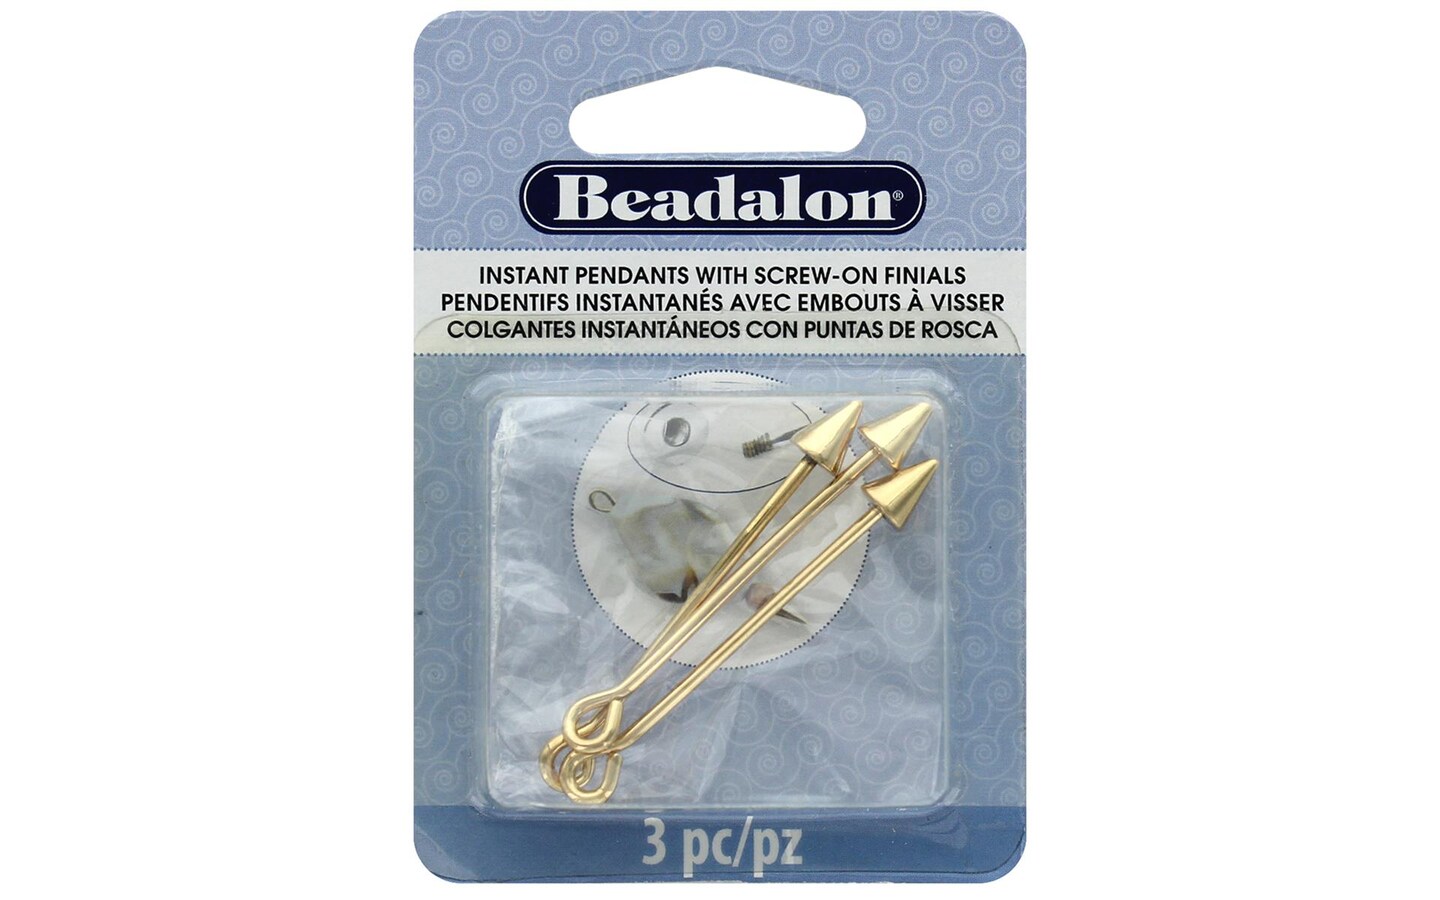 Beadalon Instant Pendant Cone 36.6mmx1.6mm Gld 3pc